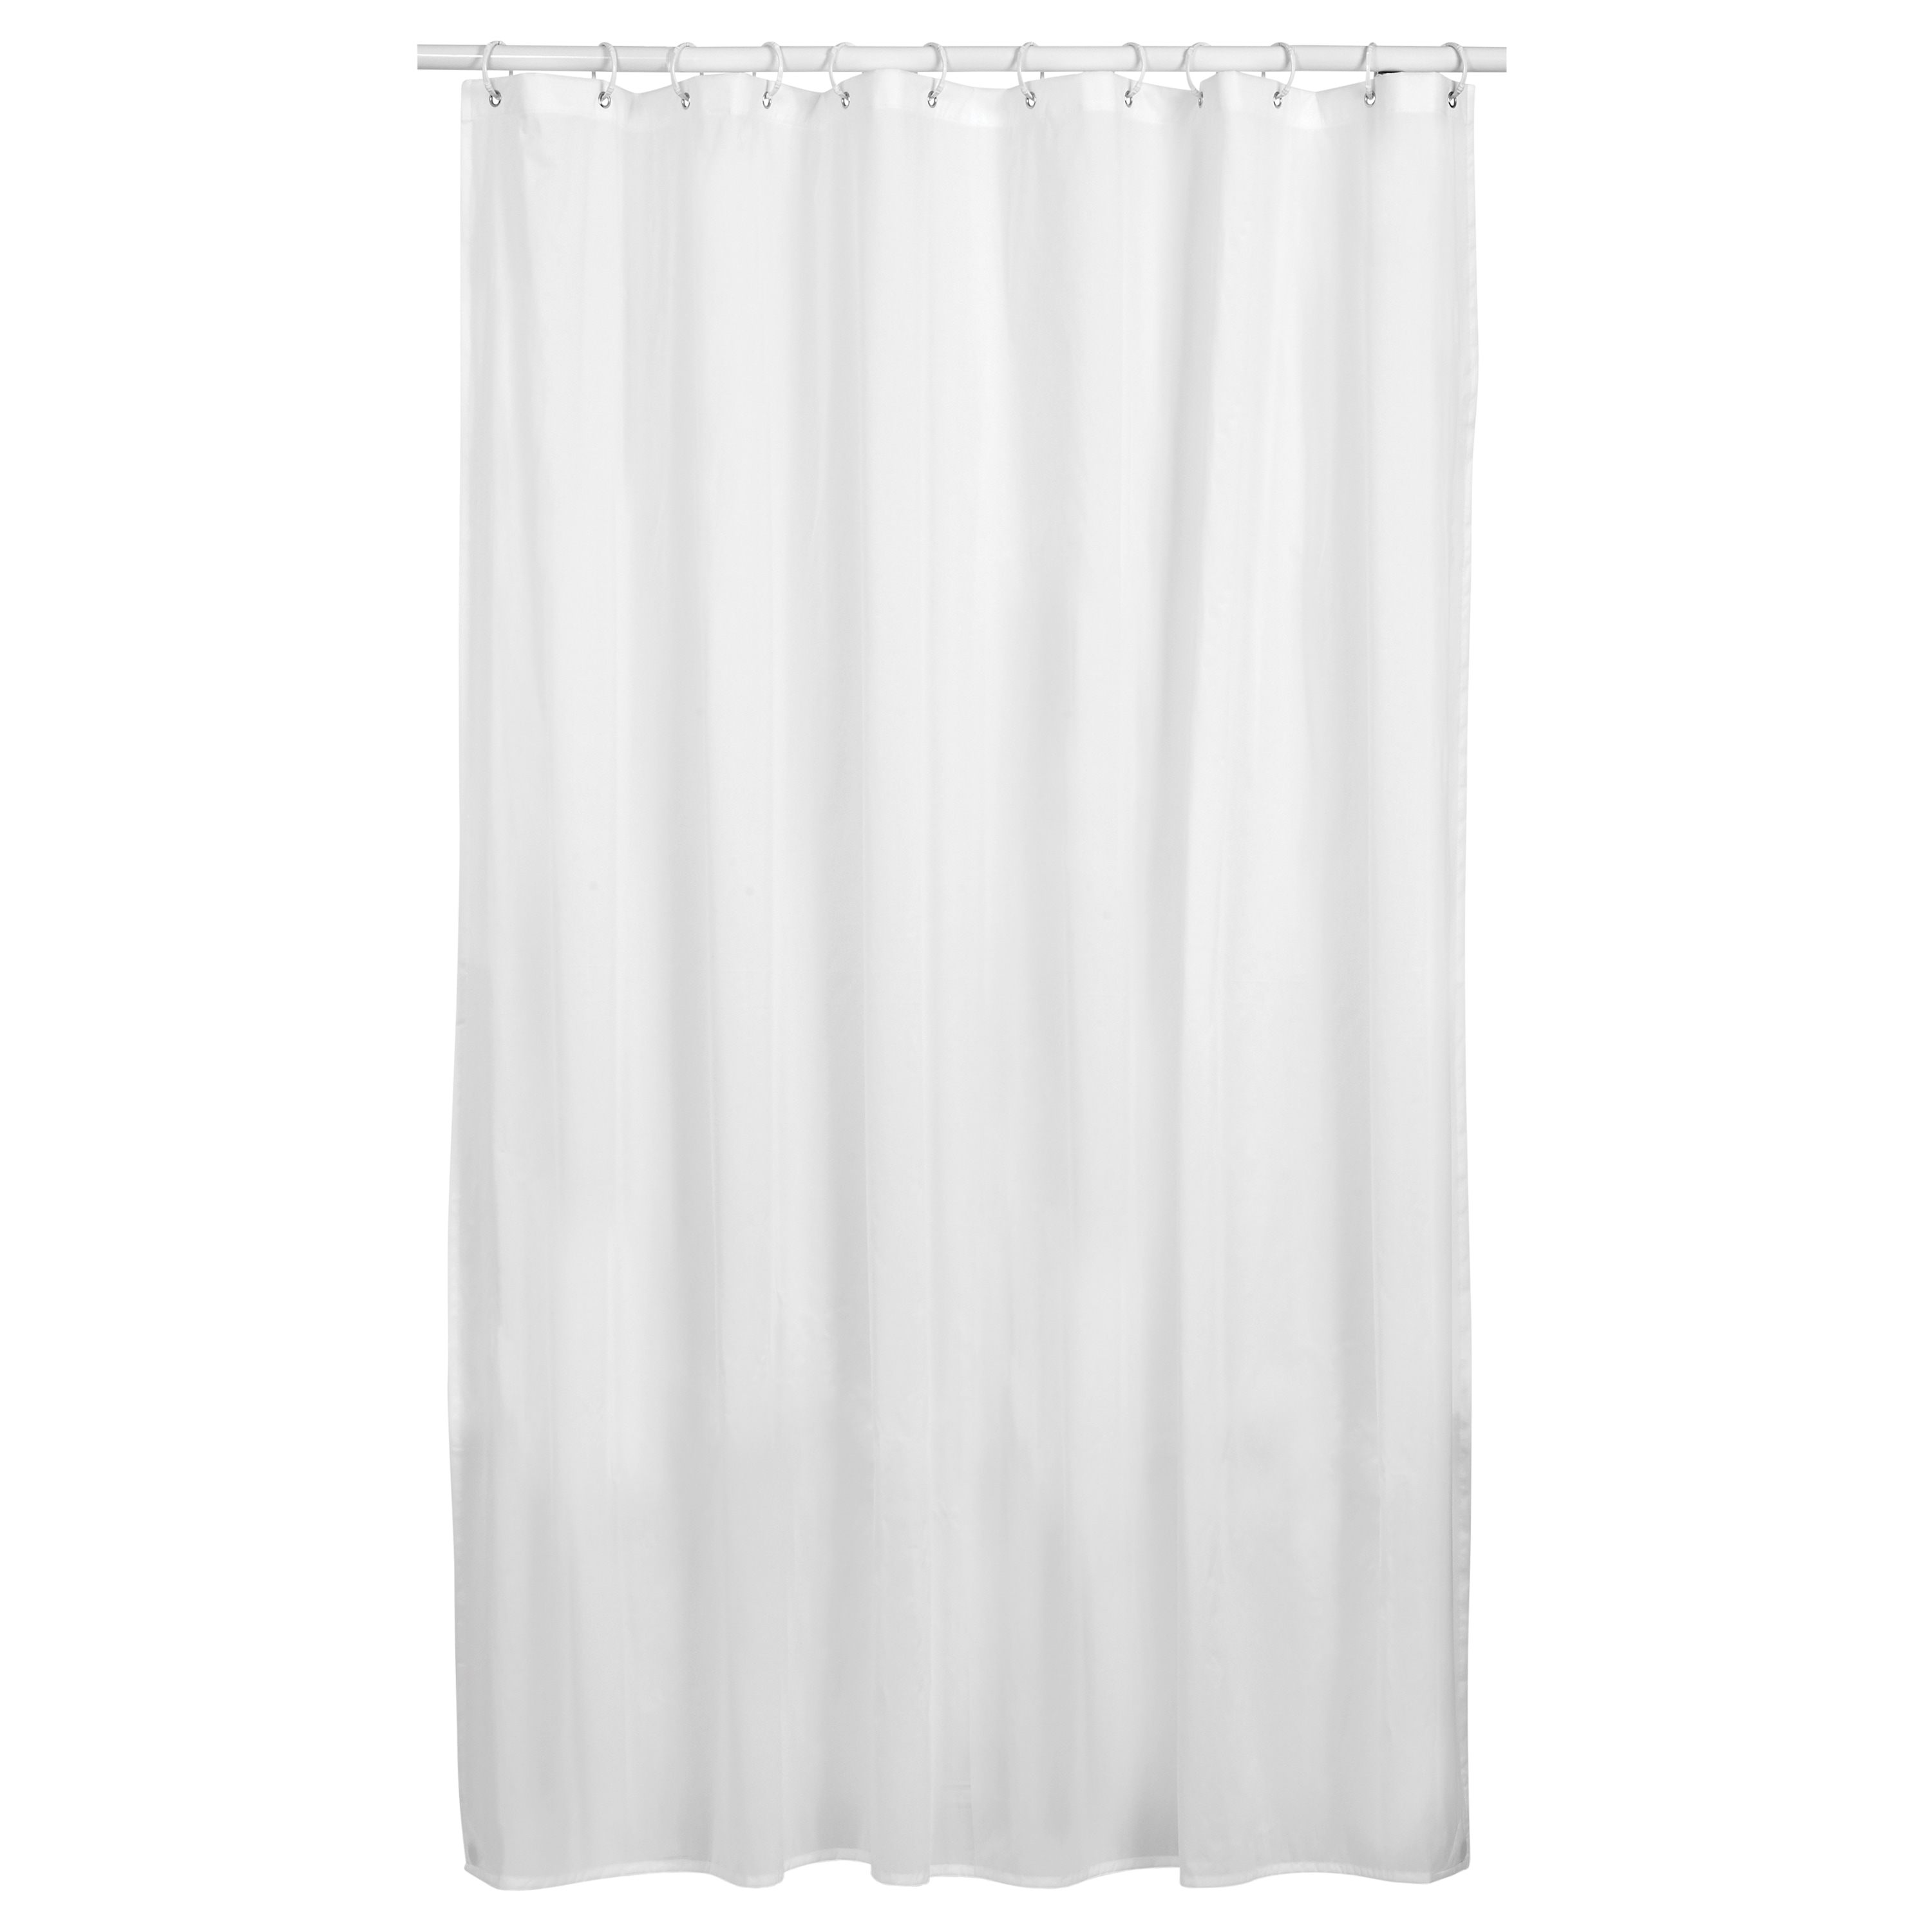 Night Owl Waterproof Bathroom Polyester Shower Curtain Liner Water Resistant 